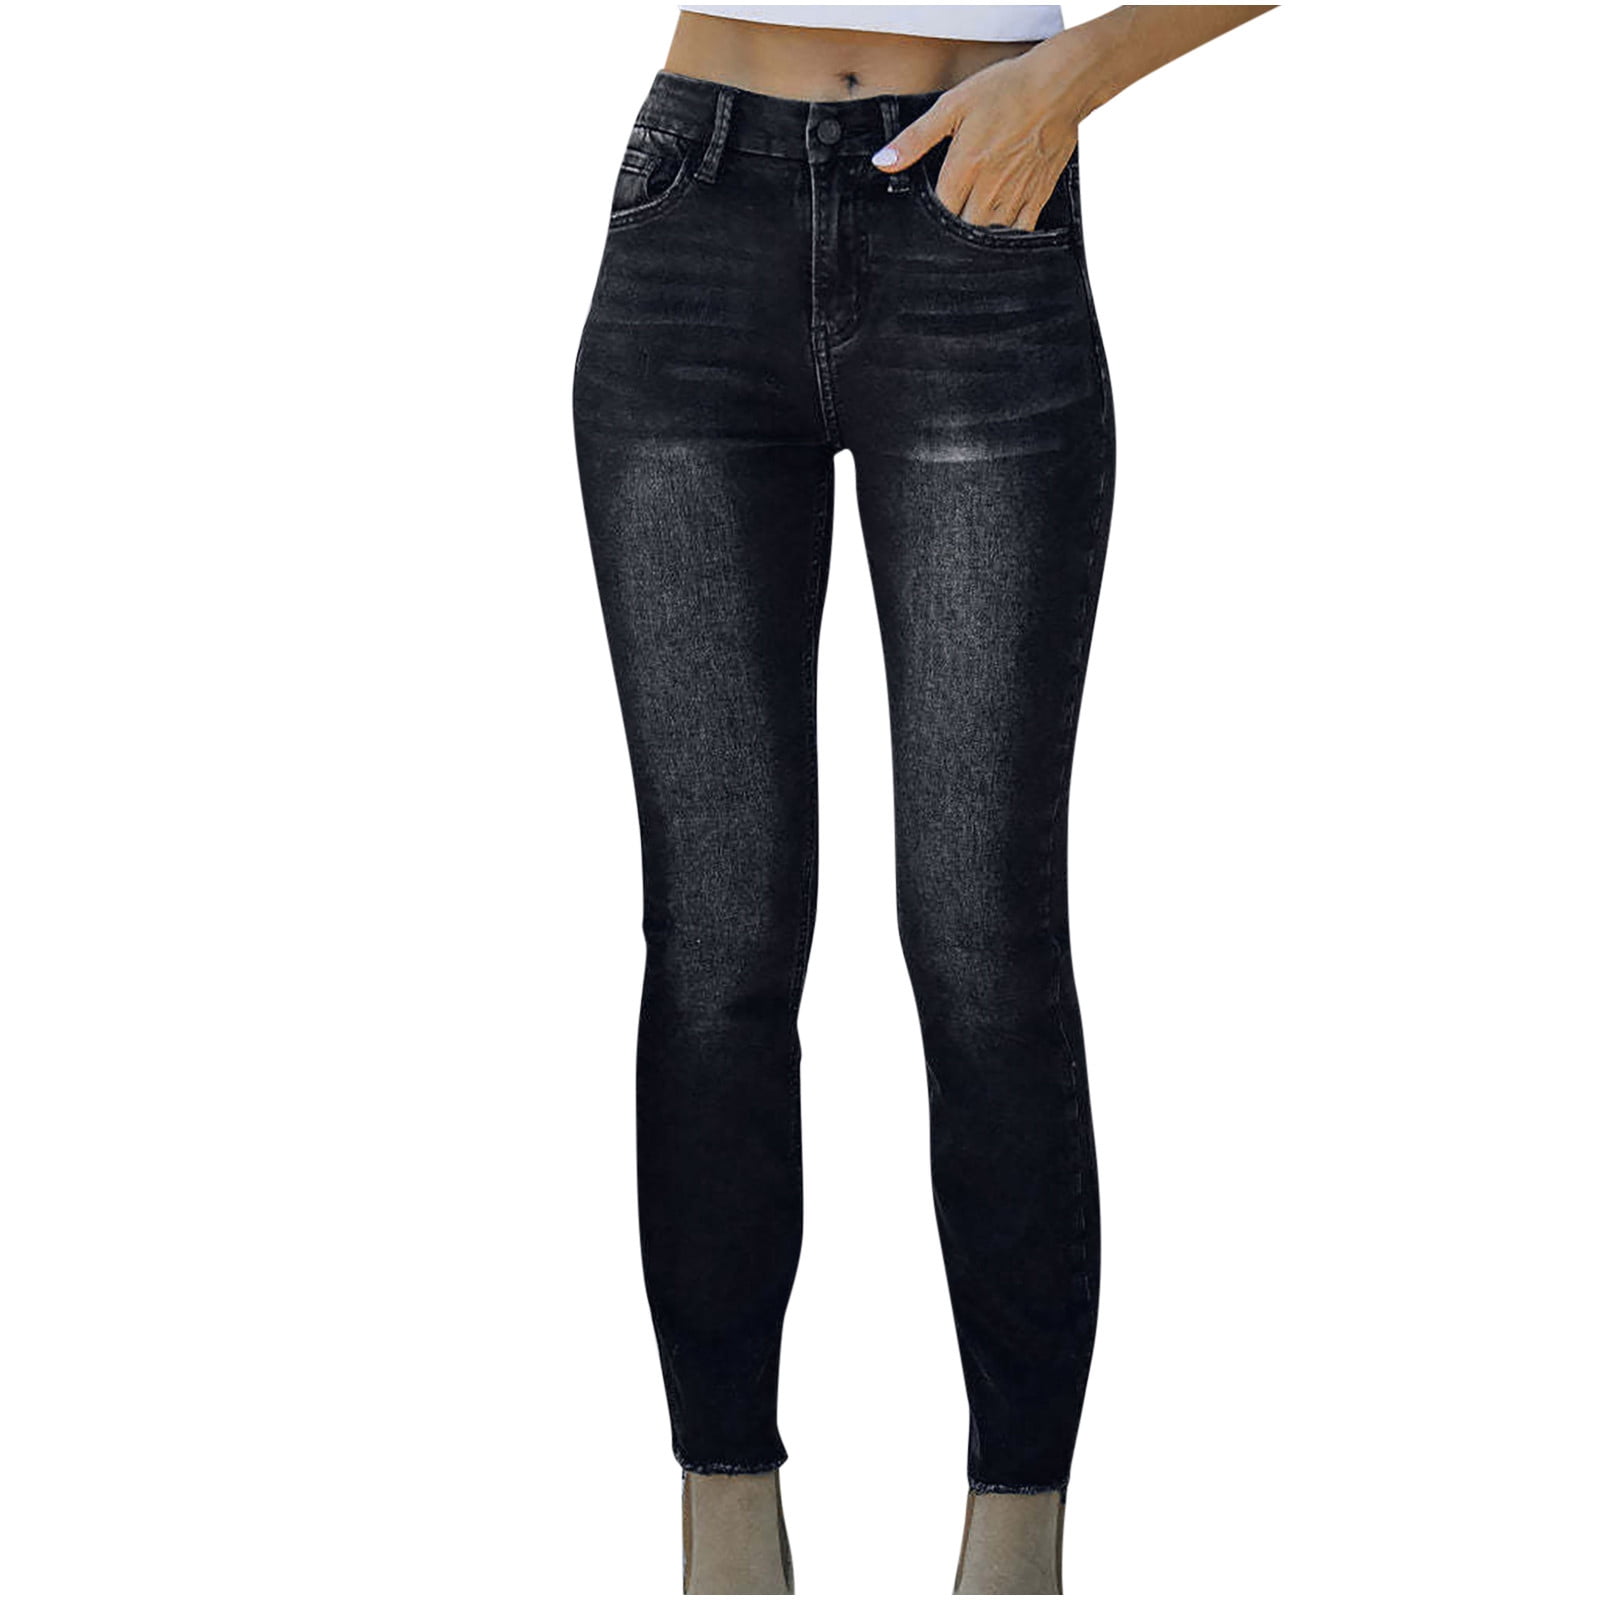 DAETIROS Athletic Works Women Pants Soild Color Straight-Leg Pants Slim Fit  Elasticity Jeans With Pocket Jeans Slim Prevalent Black Size M 